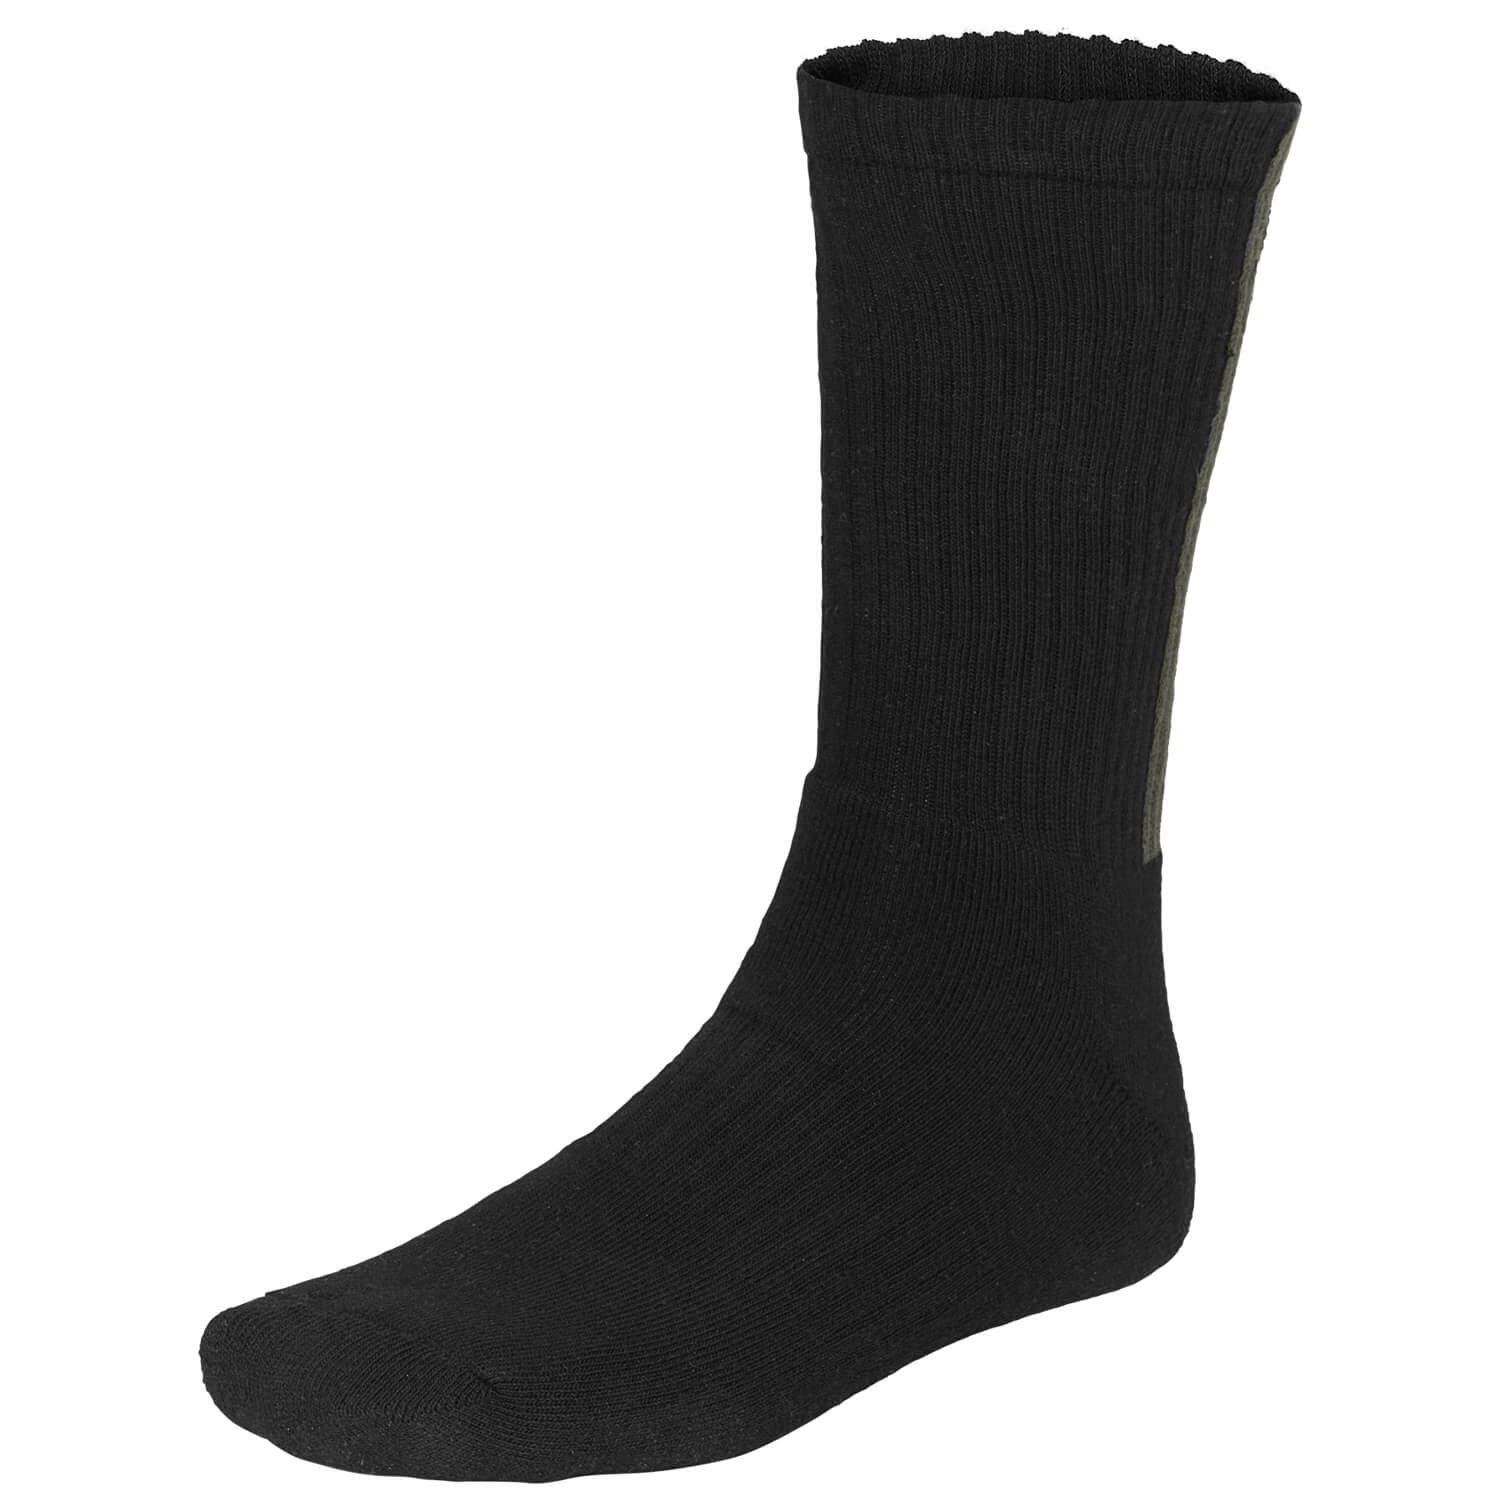 Seeland socks 3pcs Moor - Underwear